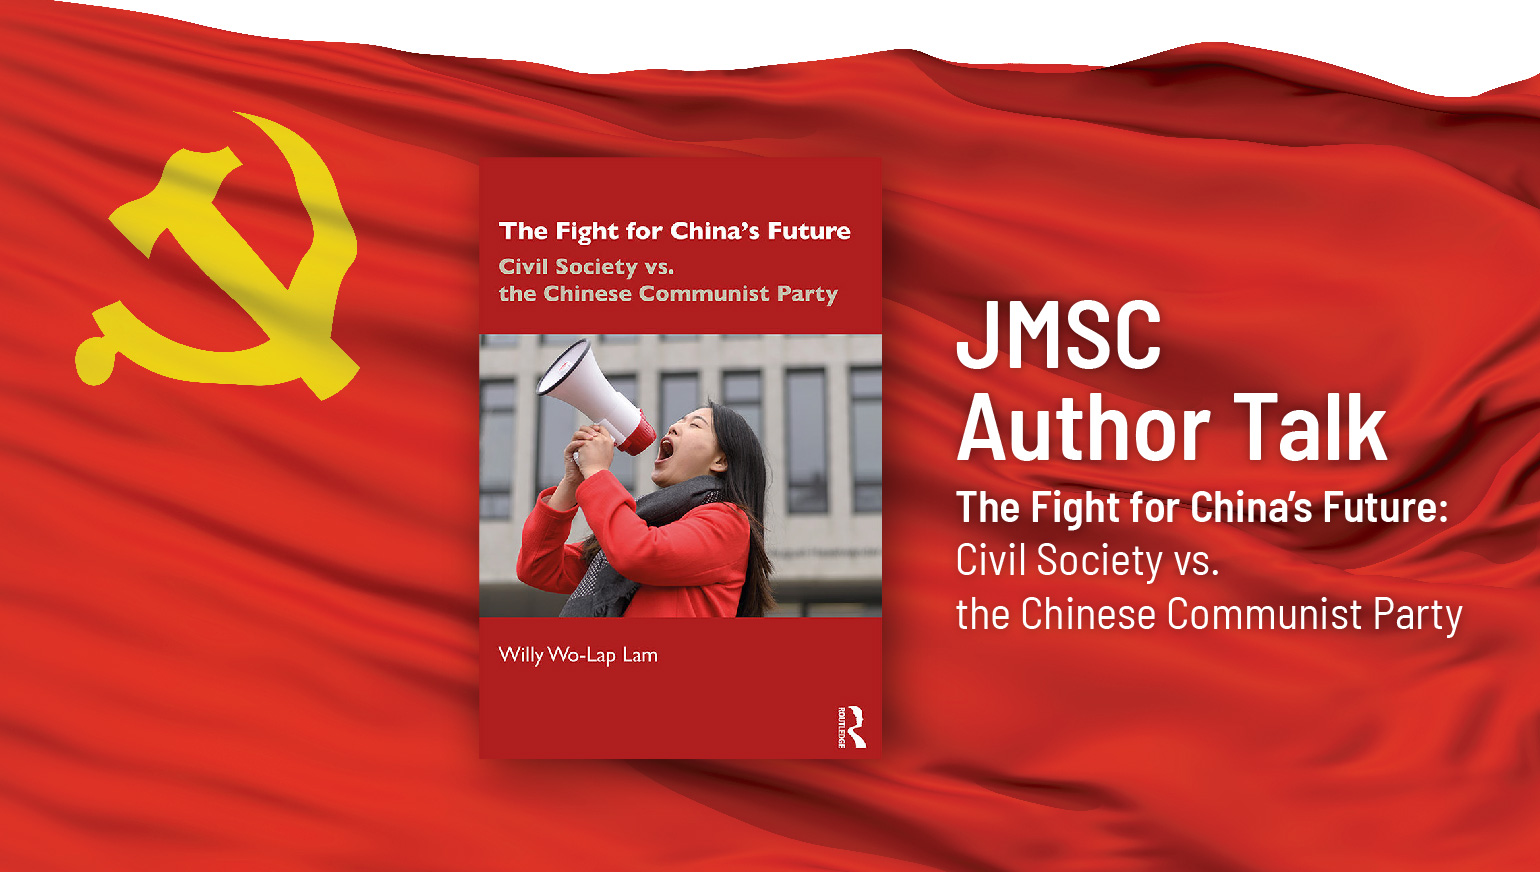 (JMSC author talk) The Fight for China's Future: Civil Society vs. the CCP